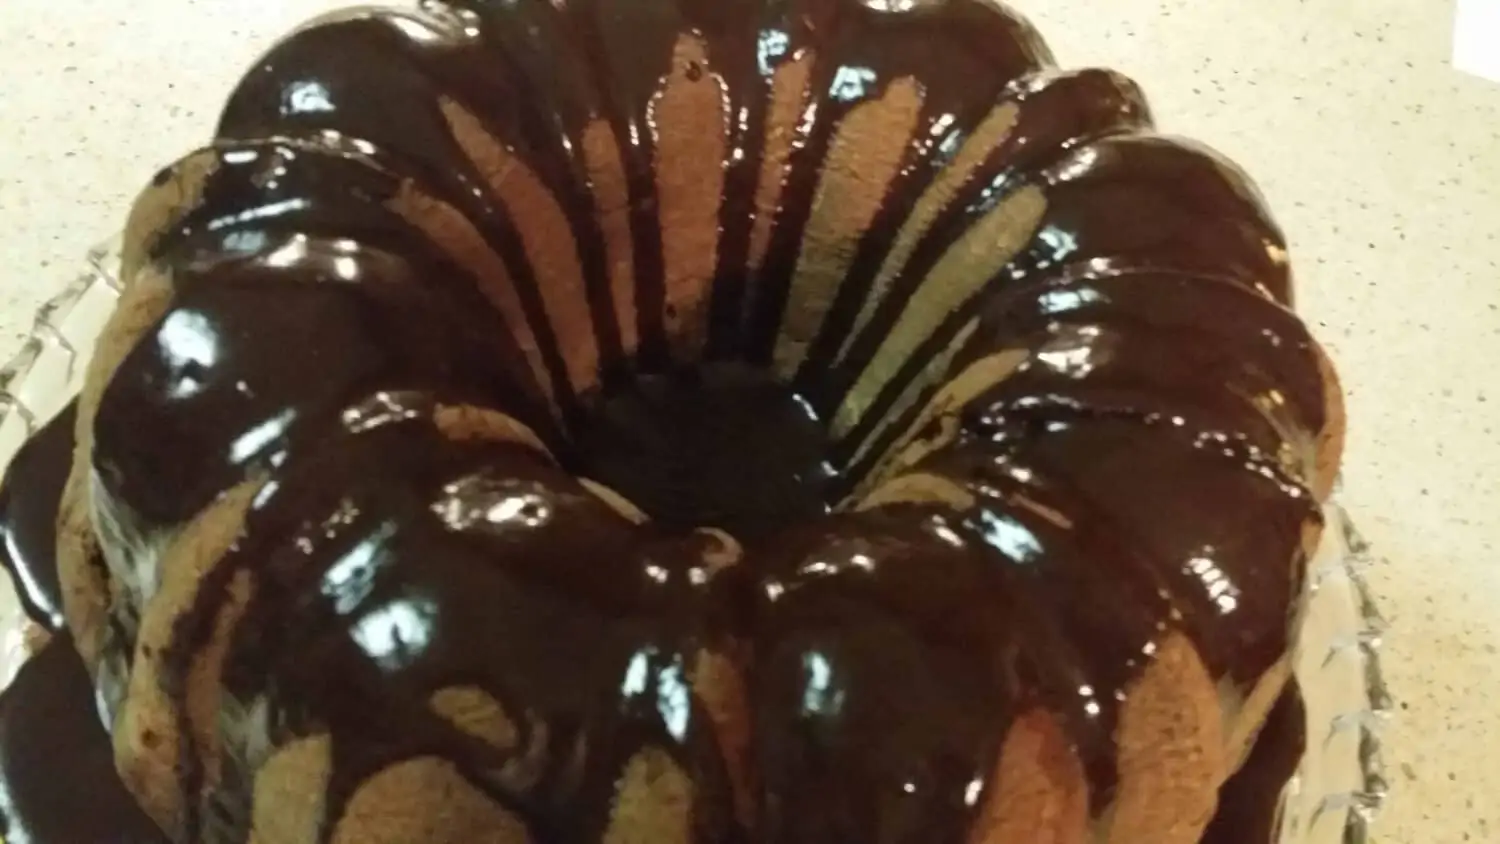 Chocolate Poundcake with chocolate ganache